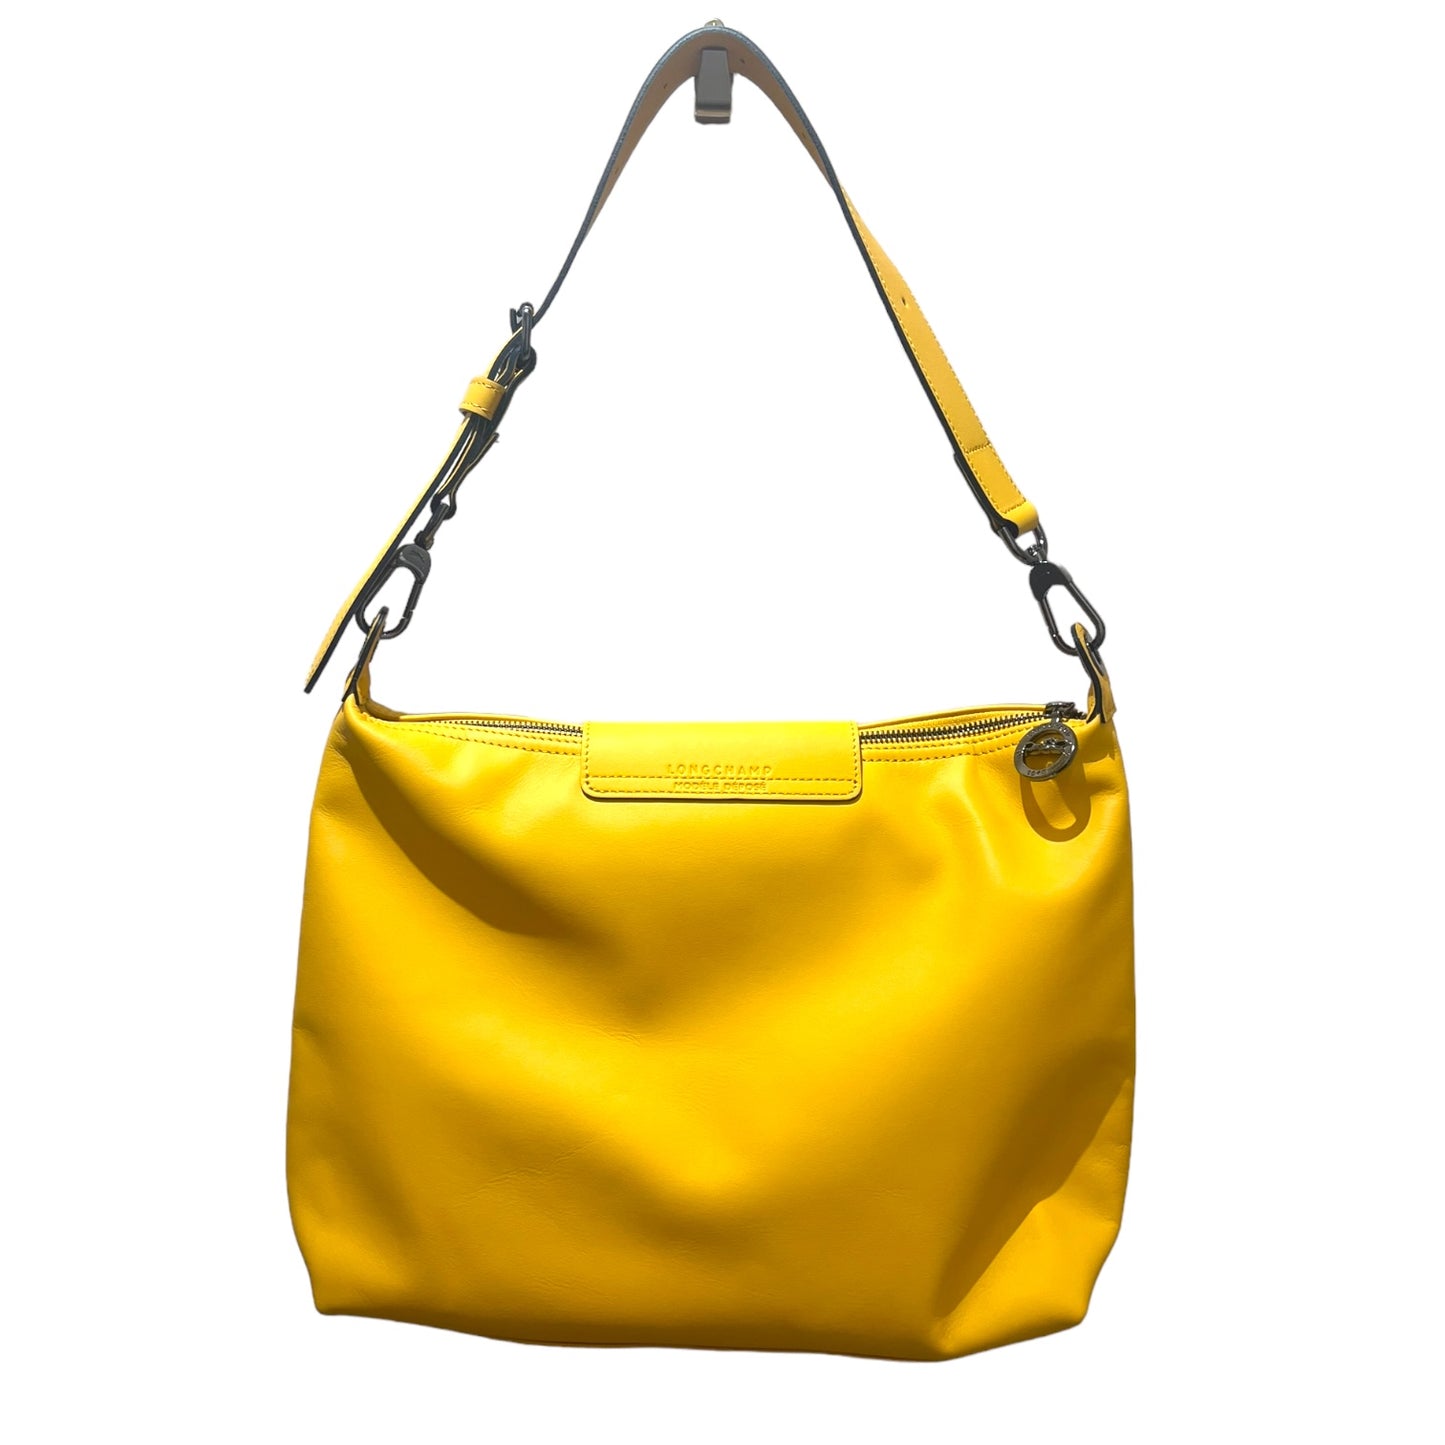 Longchamp Mustard Bag - NEW